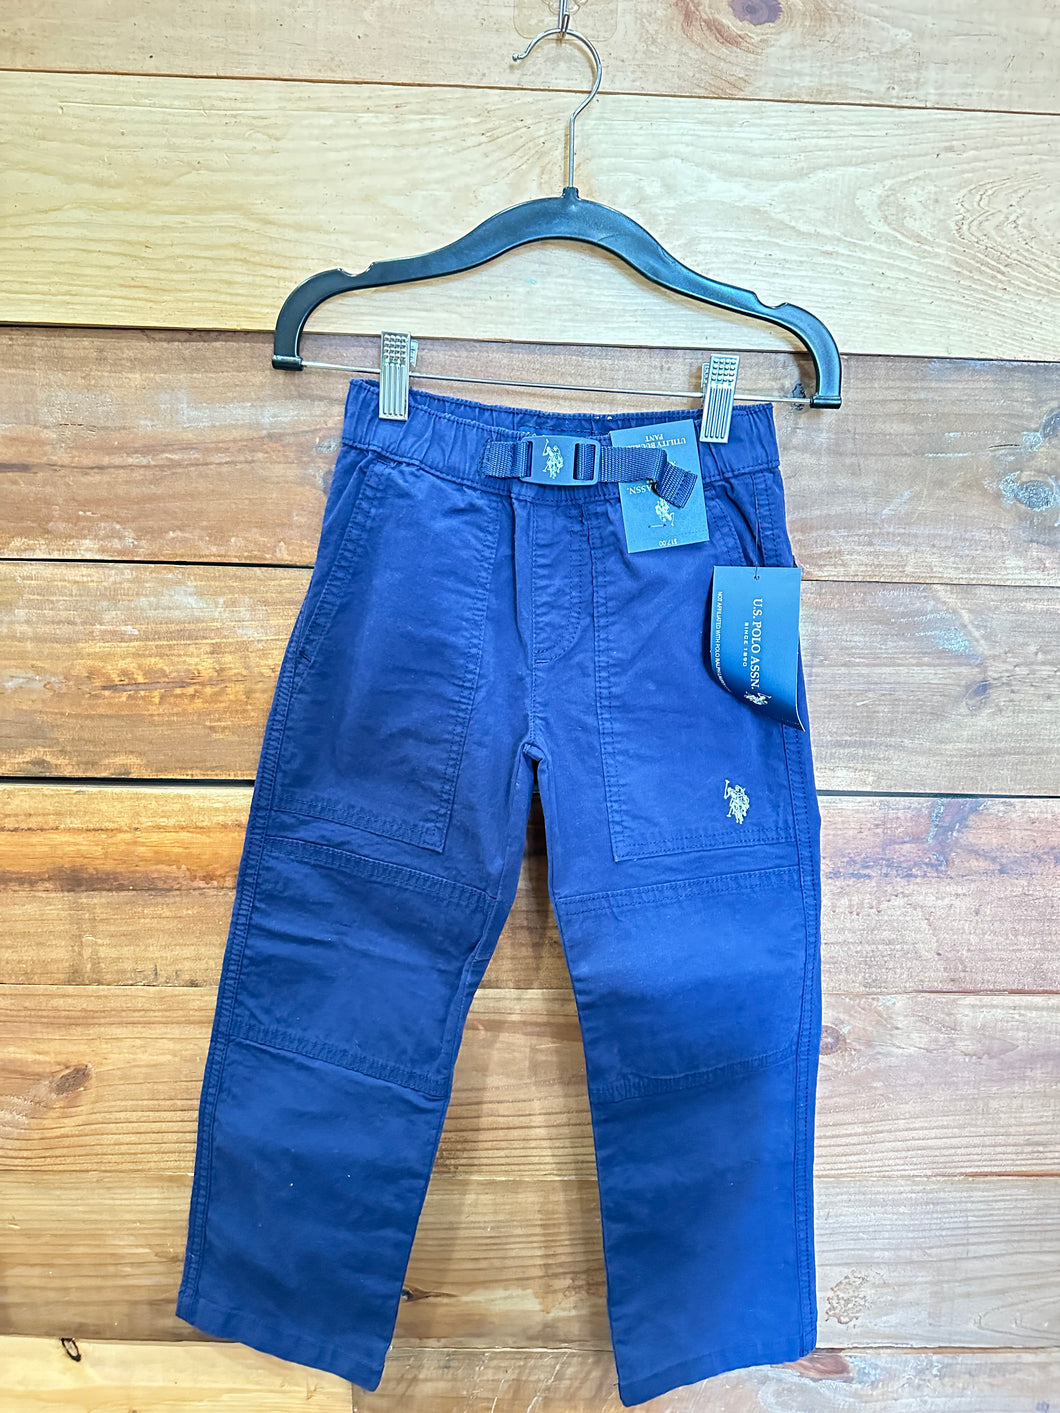 US Polo Blue Pants Size 4-5